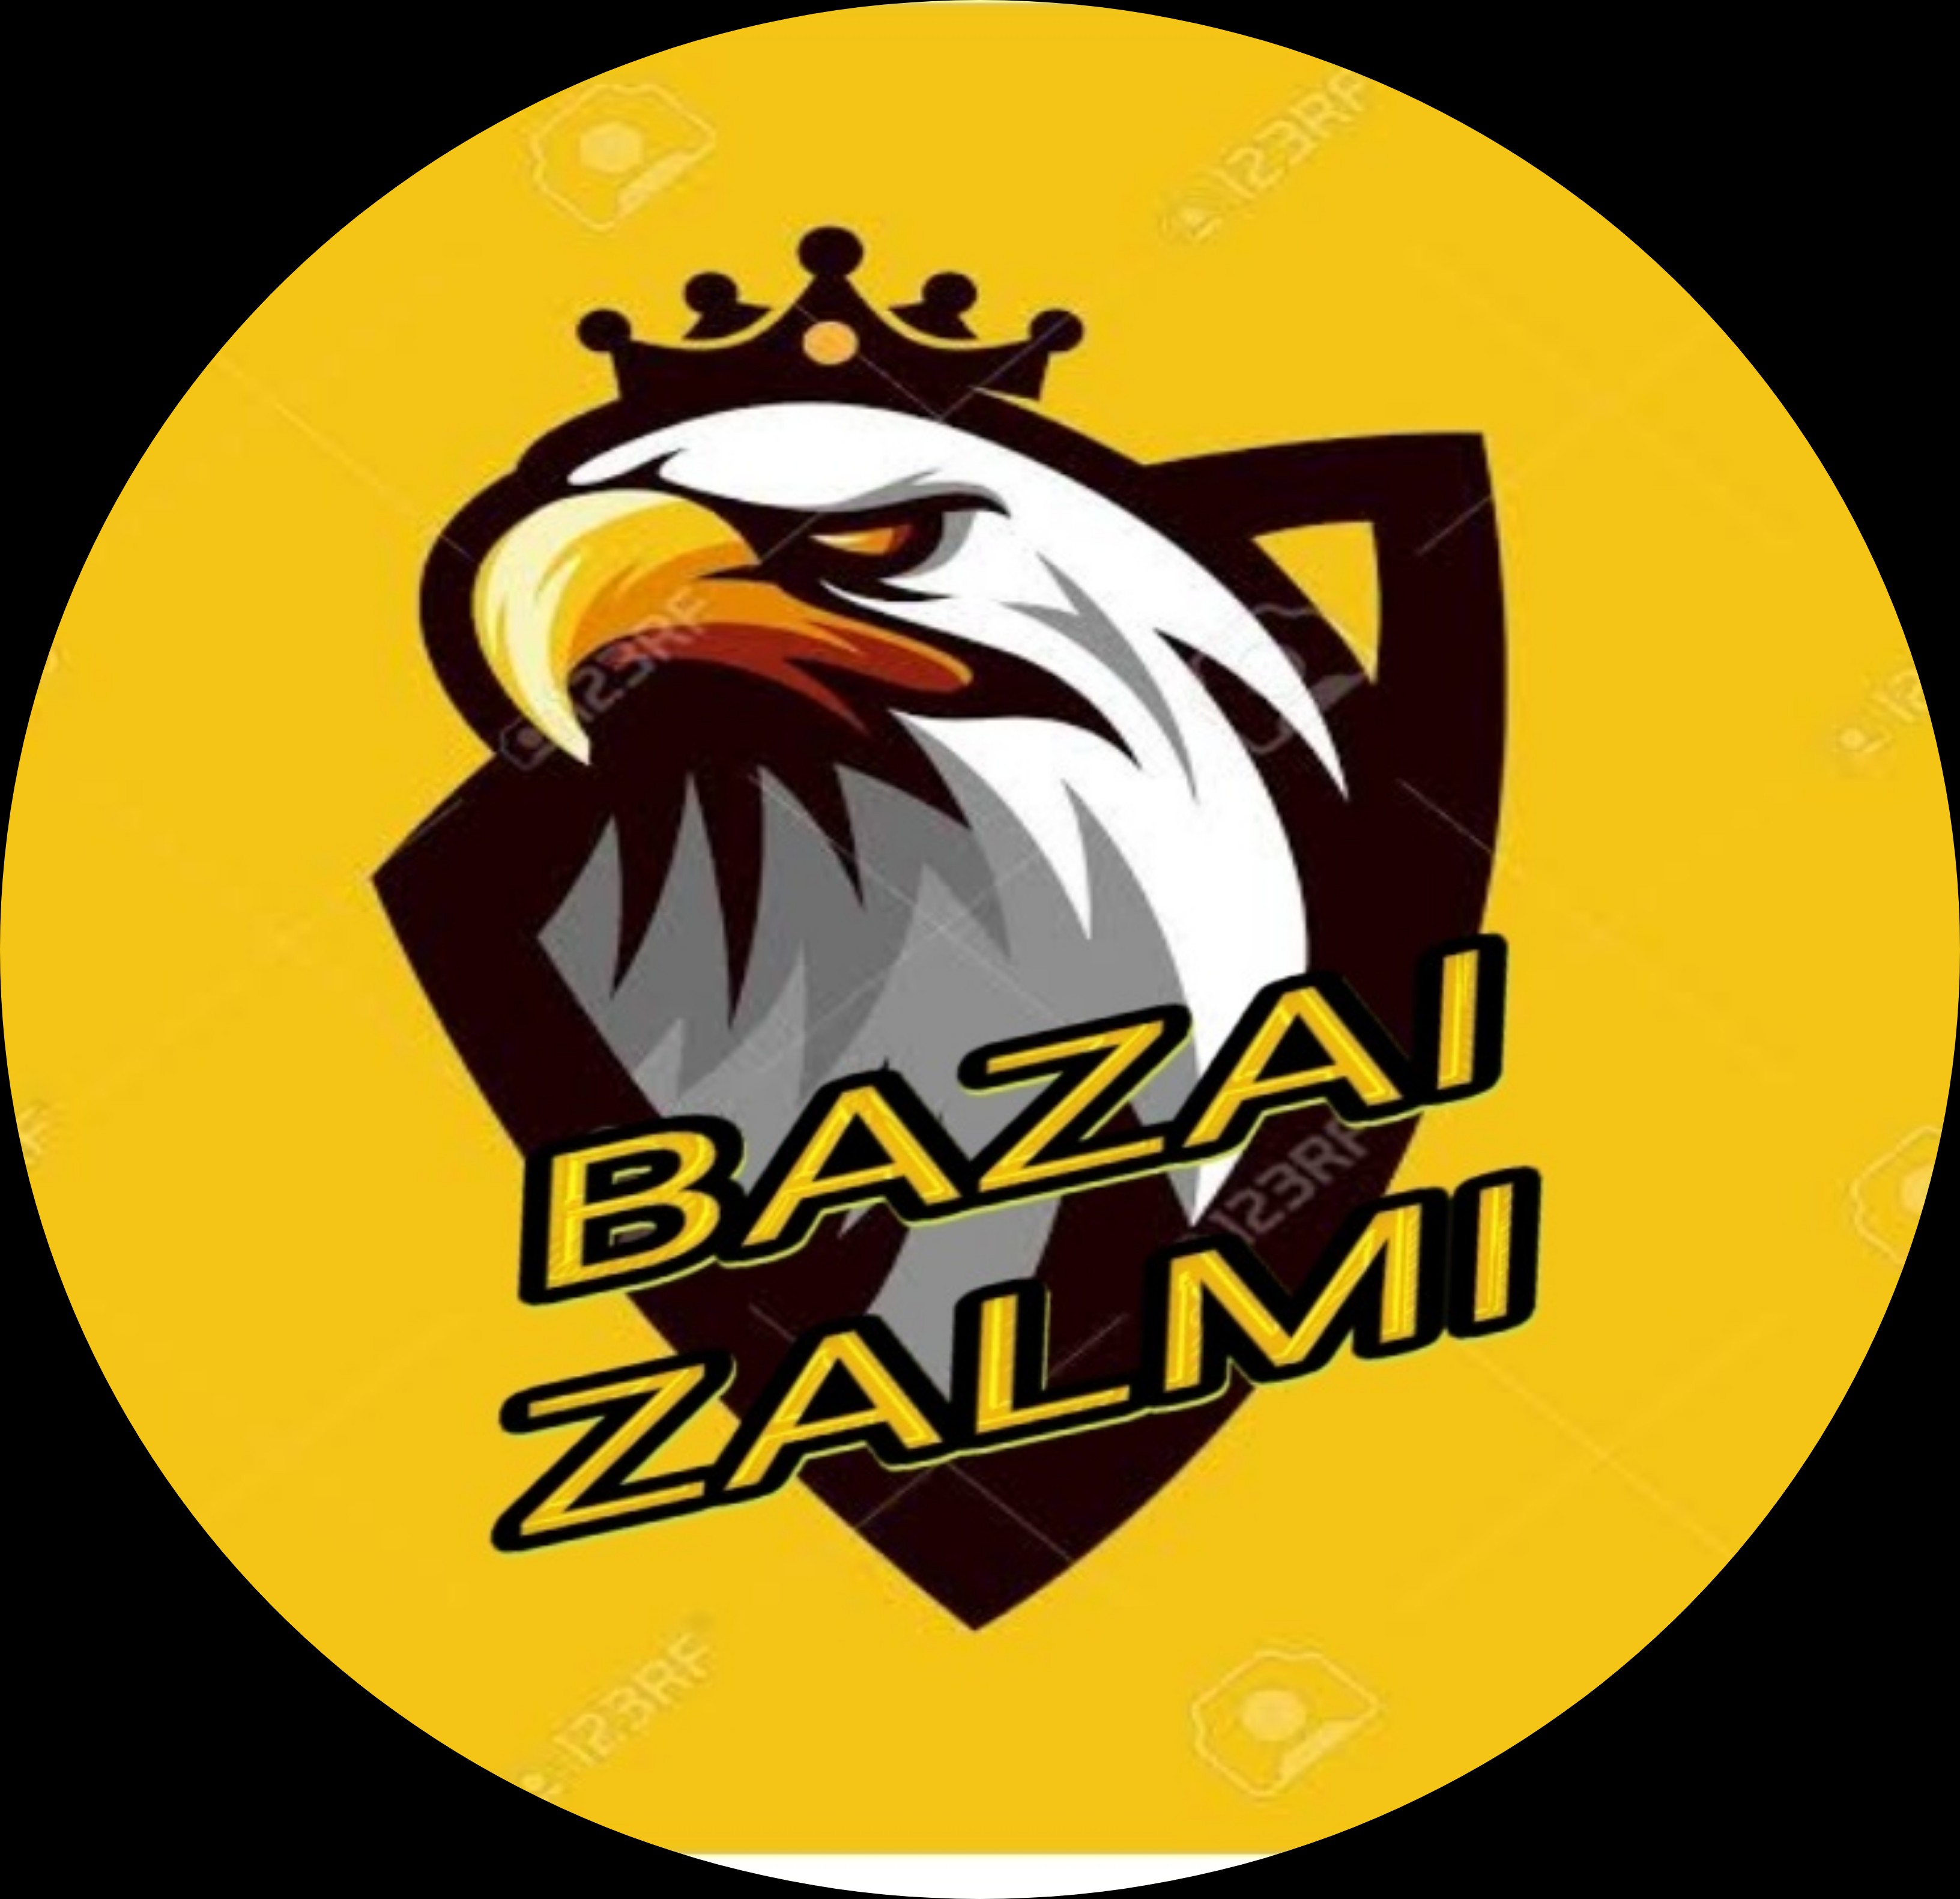 BAZAI Z